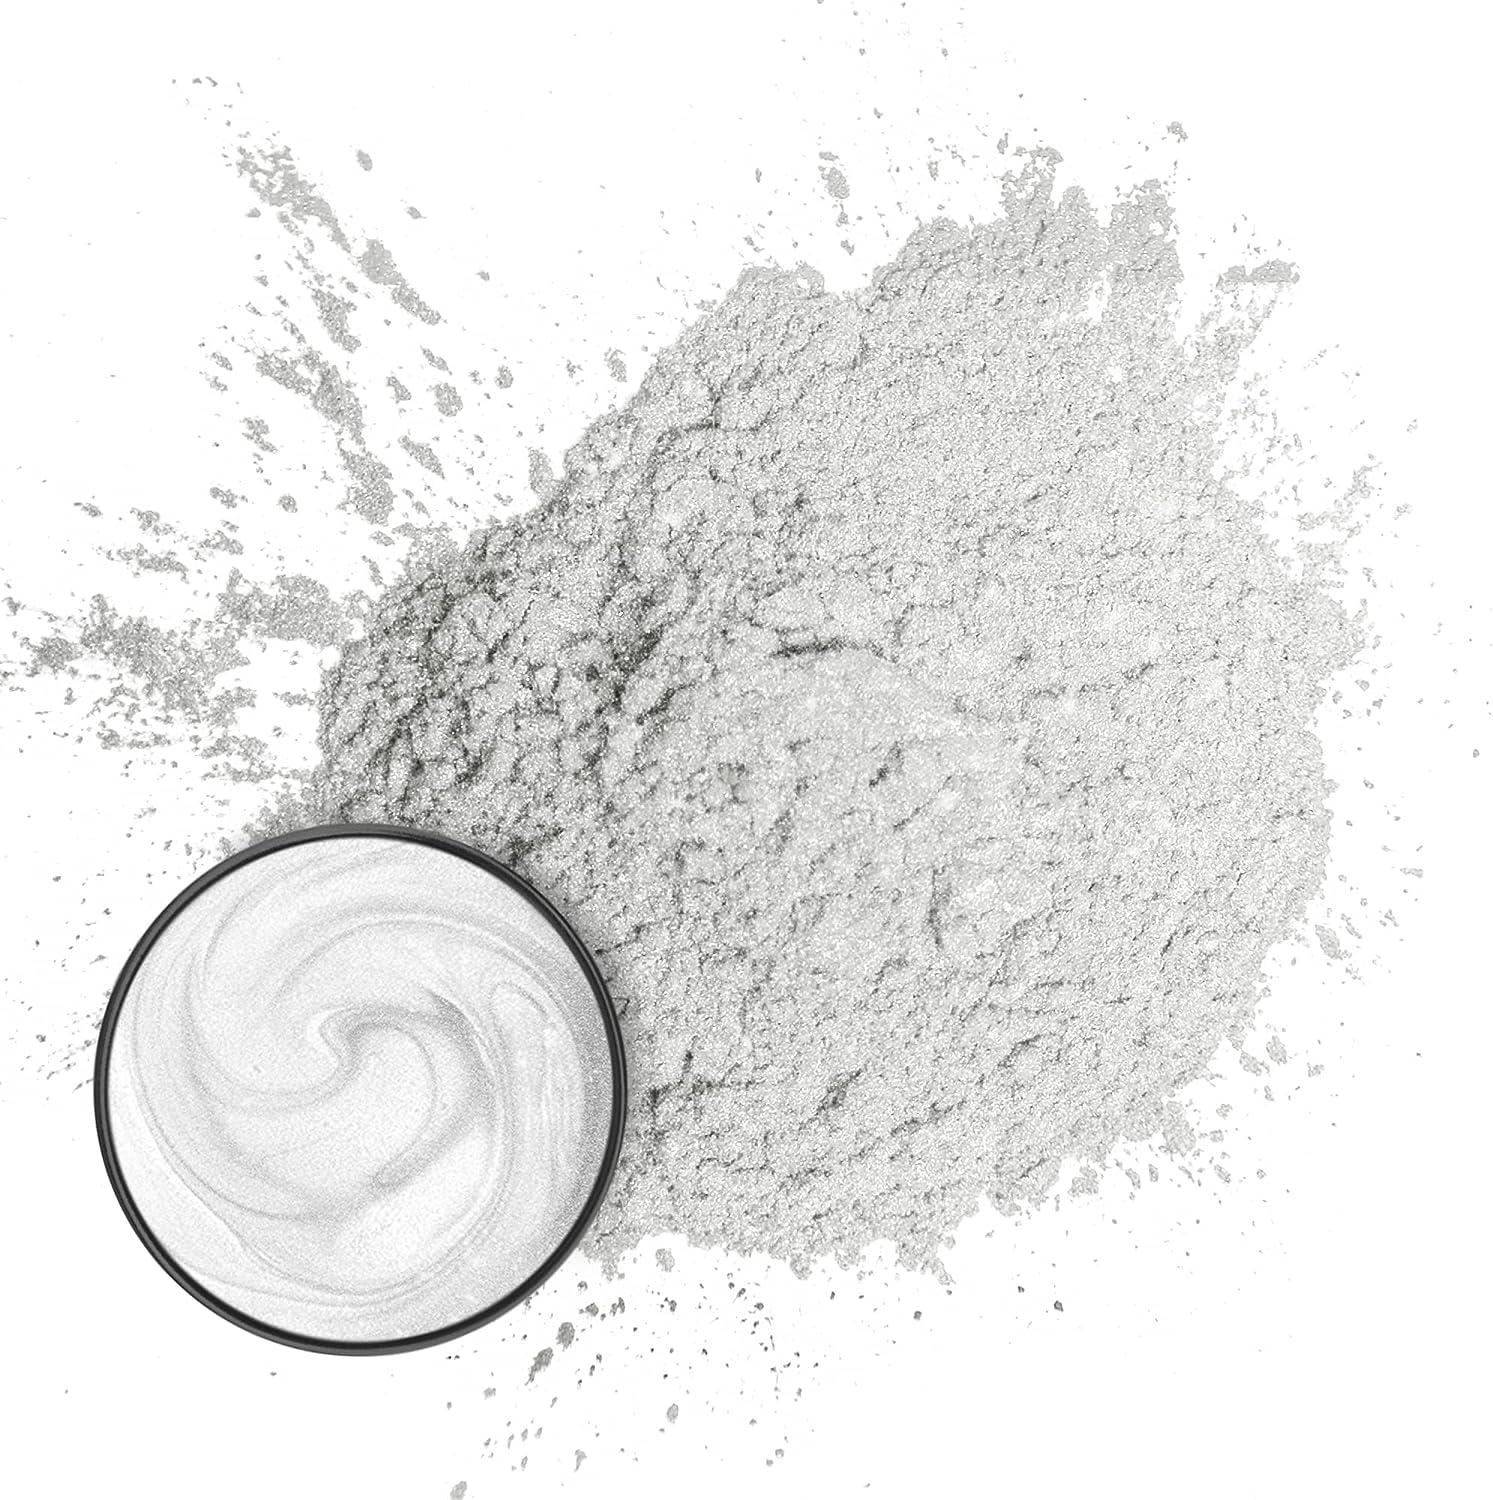 Firedots Pearl Black Pigment Powder, Black Mica Powder For Body